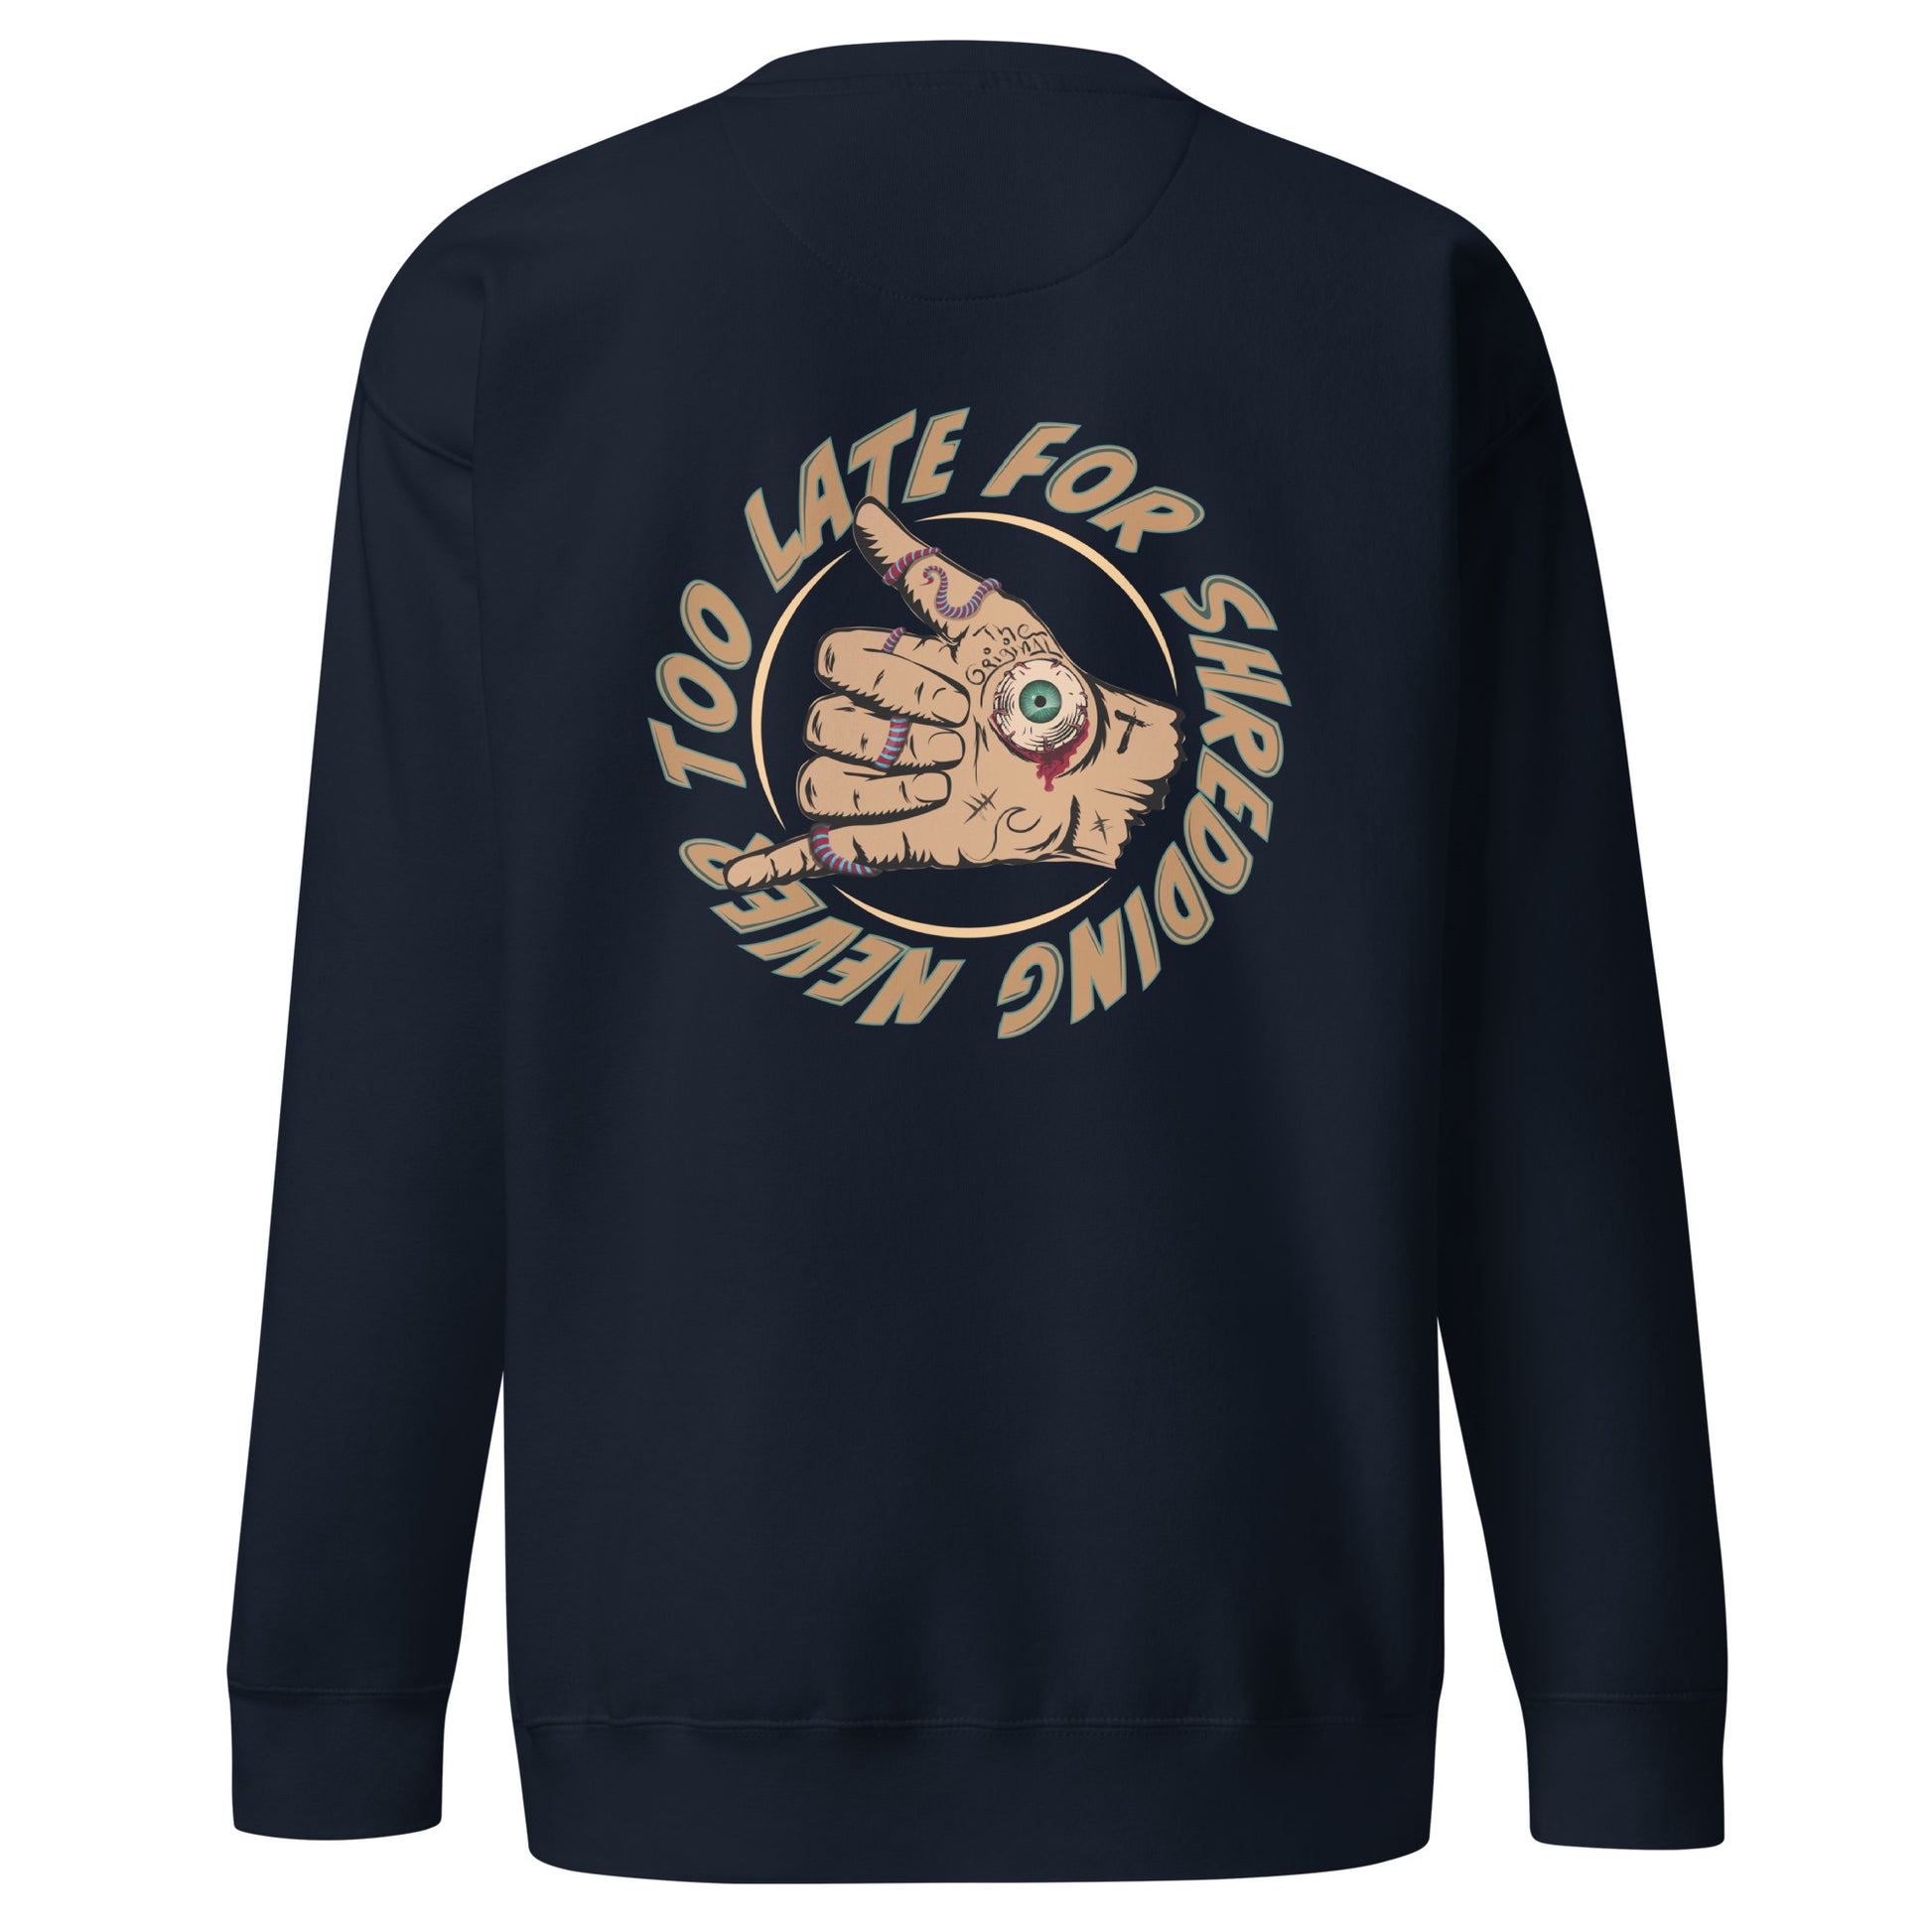 Sweatshirt Never Too Late shaka hand volcom style surfeur, avec le logo Late surfoard, sweat unisex de dos couleur navy